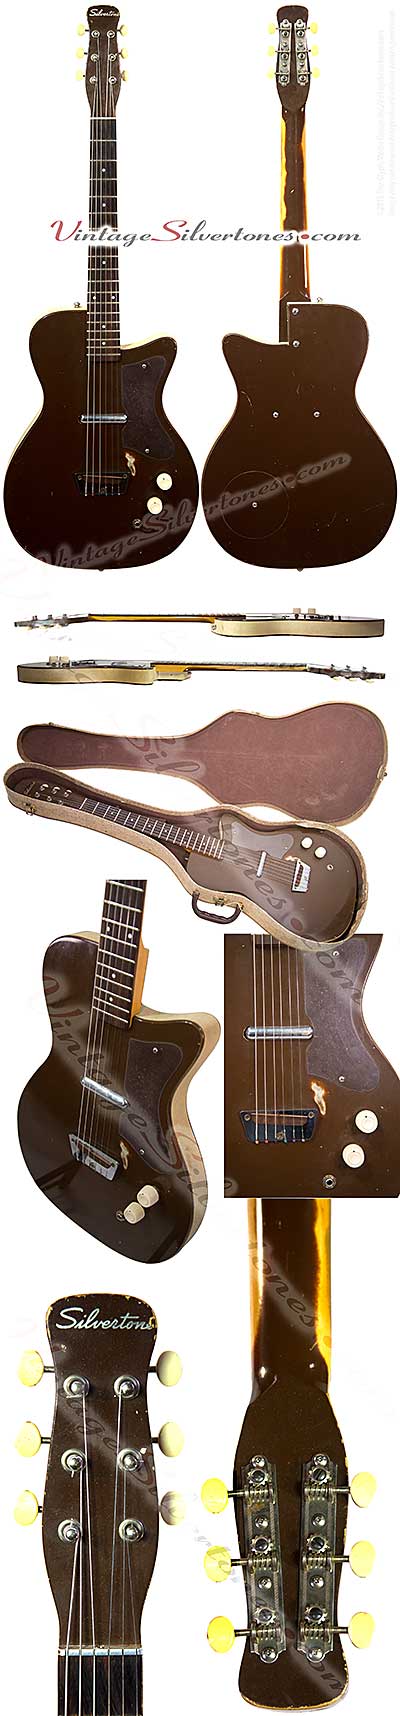 Silvertone 1452 made by Danelectro U1, one pickup, electric guitar, semi-hollow body, brown body with white tolex binding, masonite body, lipstick pickup, made in 1959